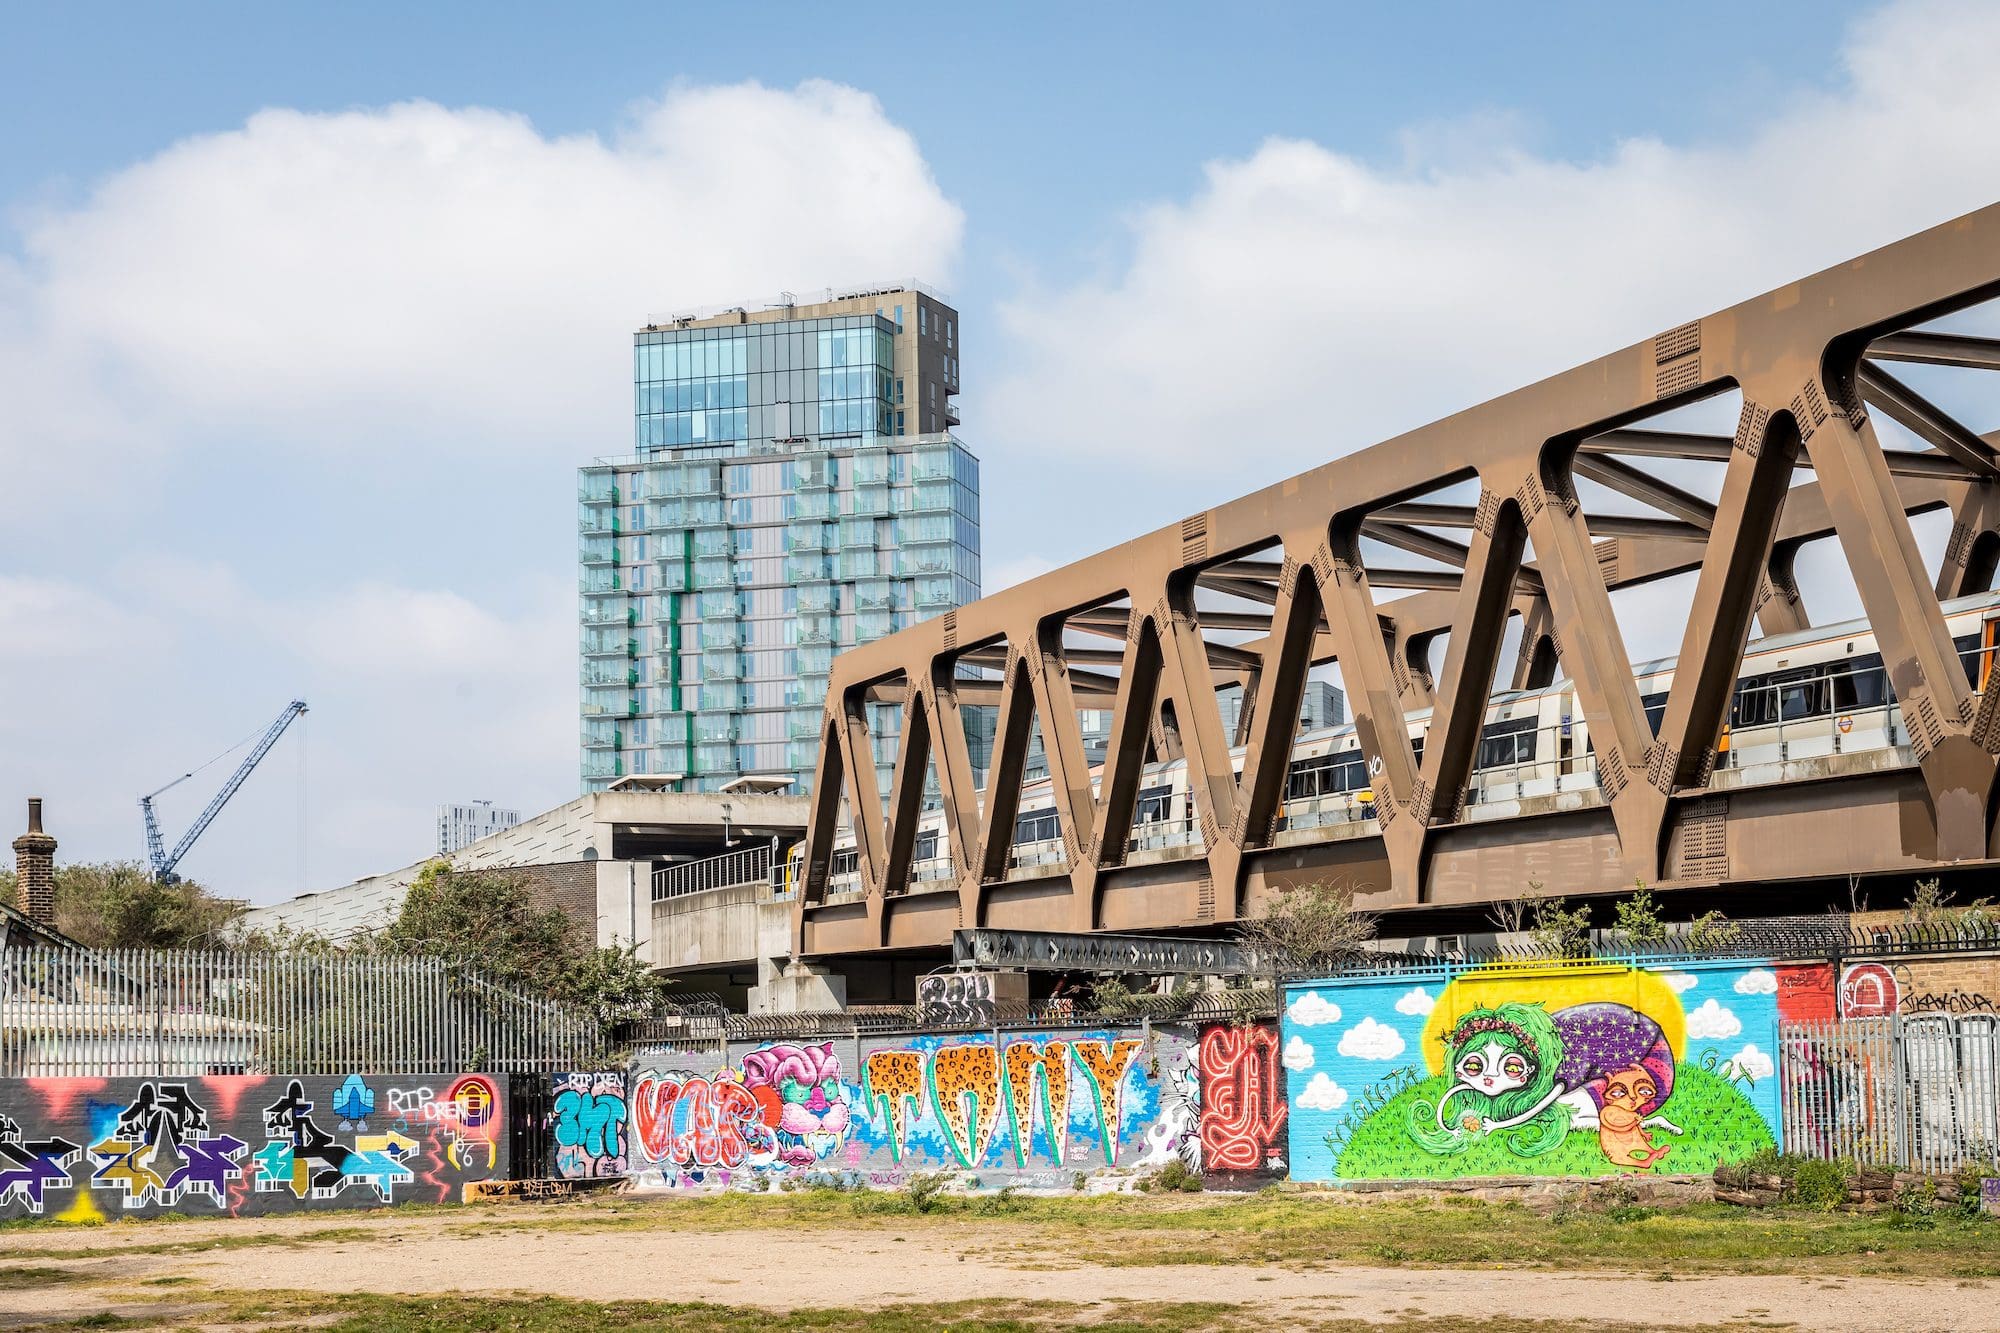 Avant Garde balconies with railway bridge and graffiti